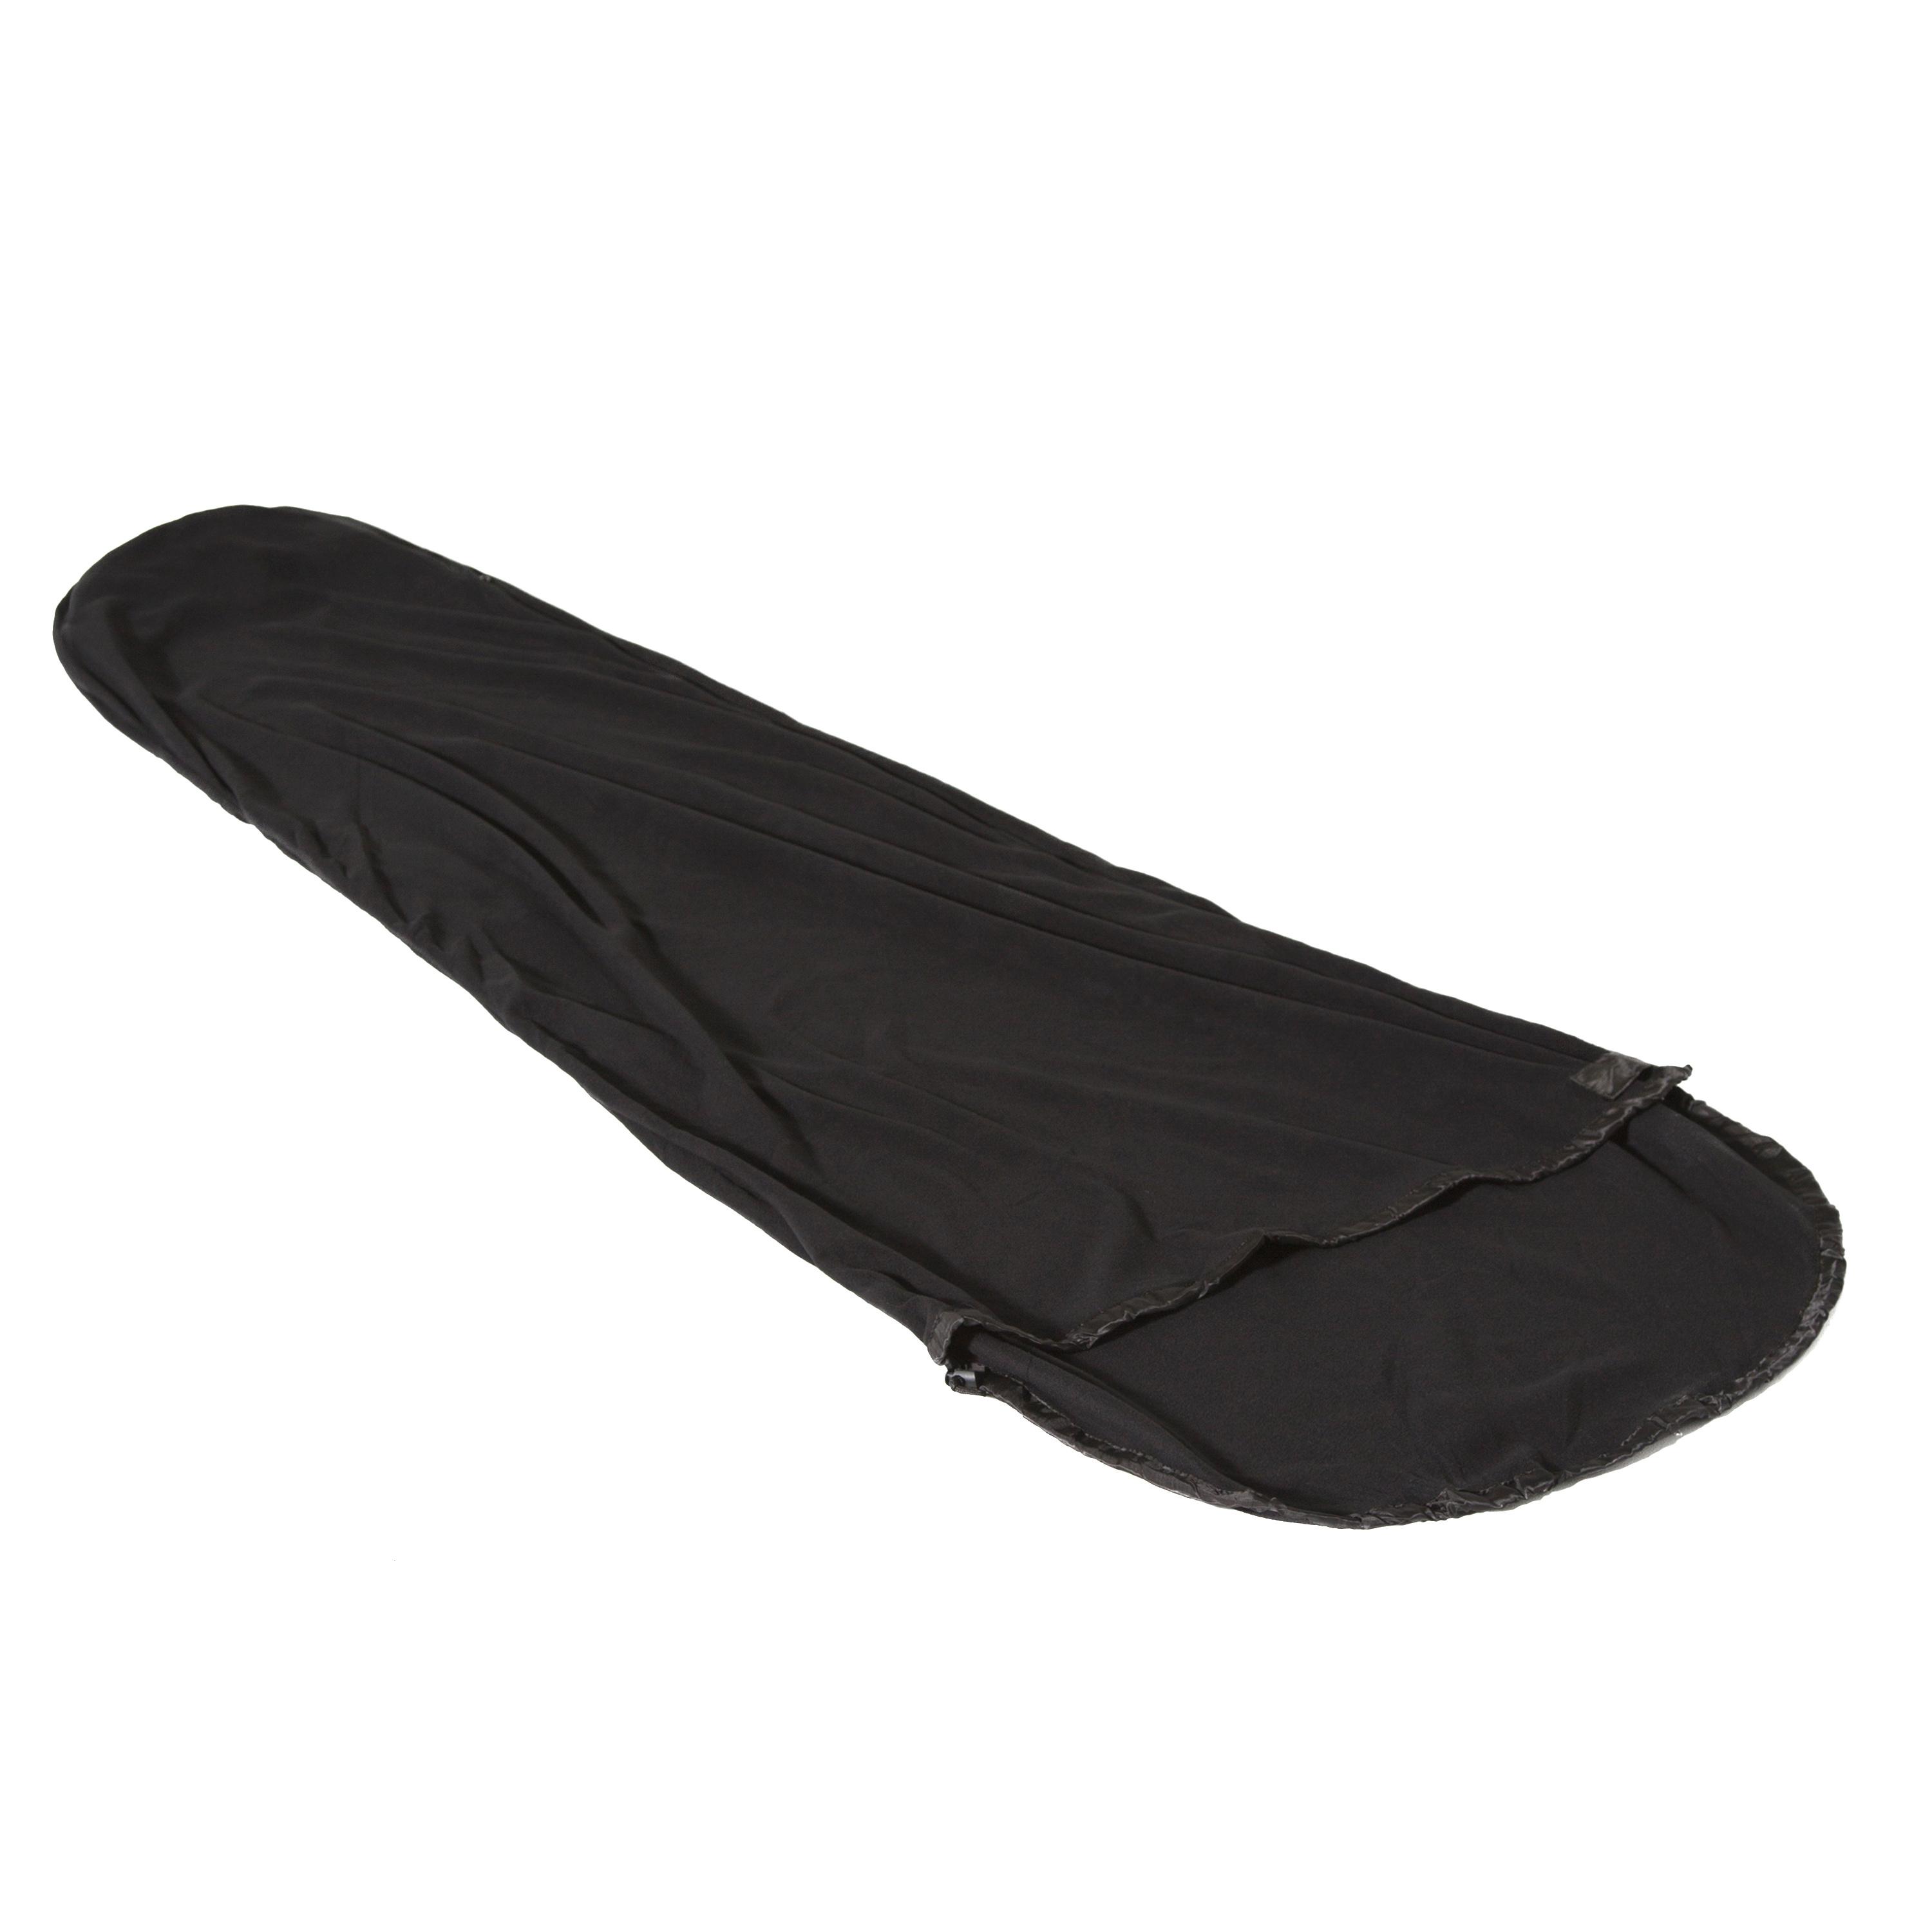 Eurohike Fleece Sleeping Bag Liner Dlx - Mummy - Black/blk  Black/blk